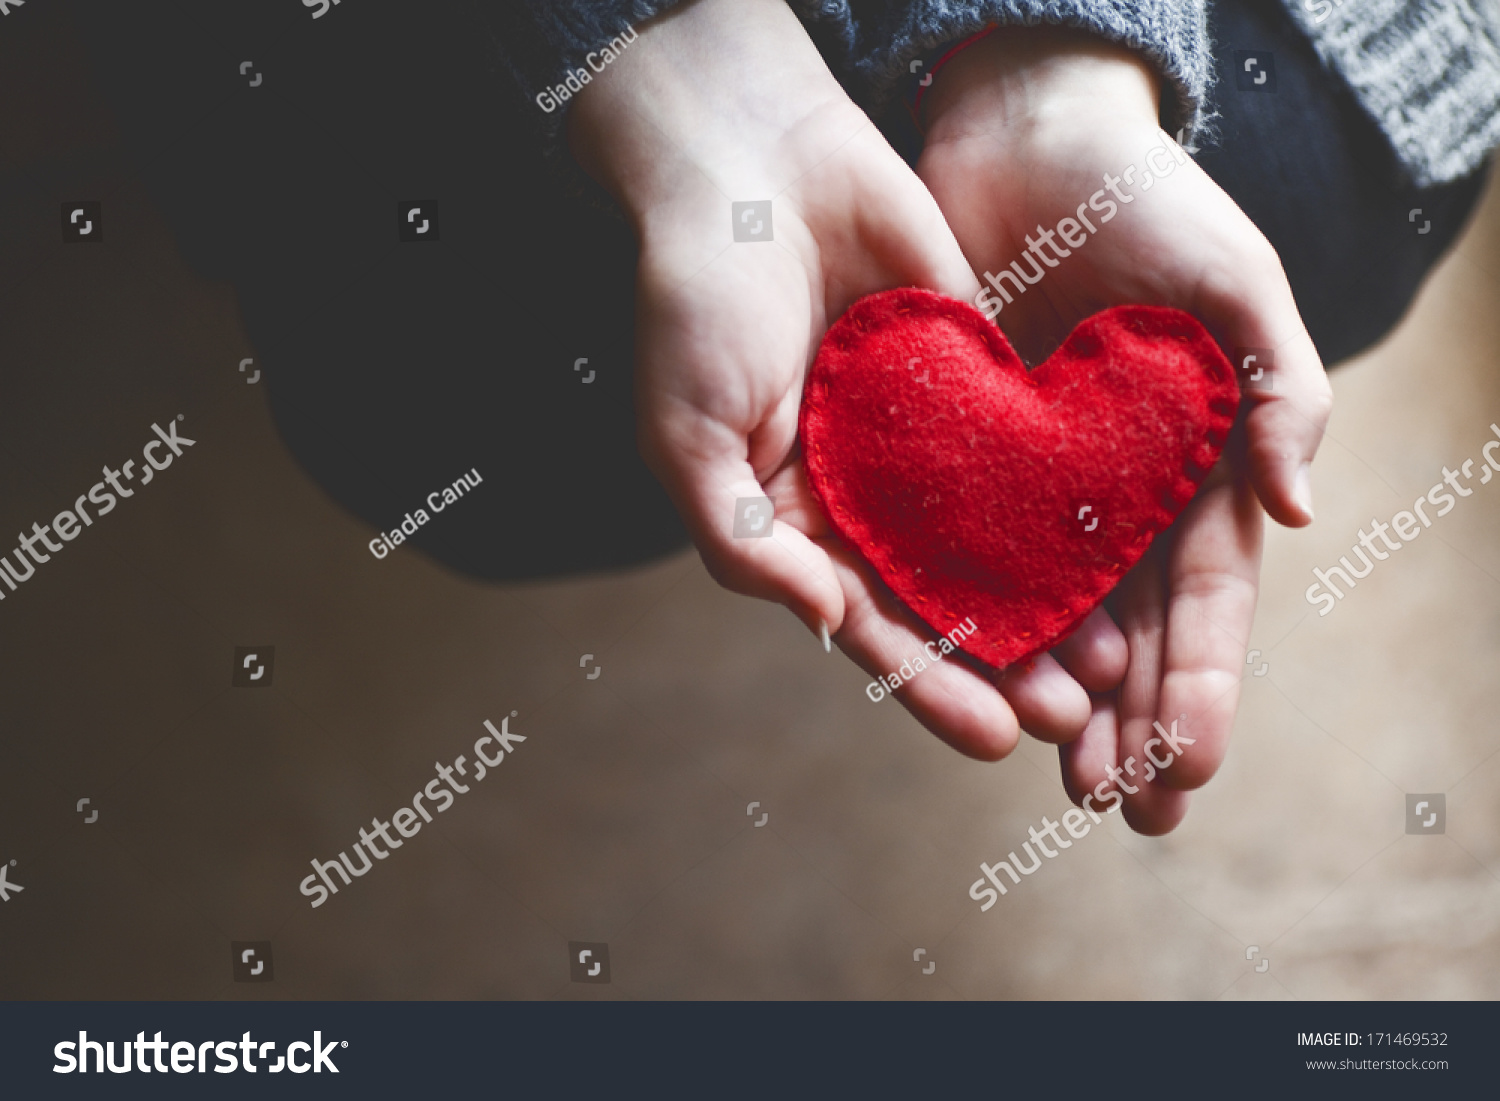 Hands Holding Soft Heart Shape Stock Photo 171469532 - Shutterstock